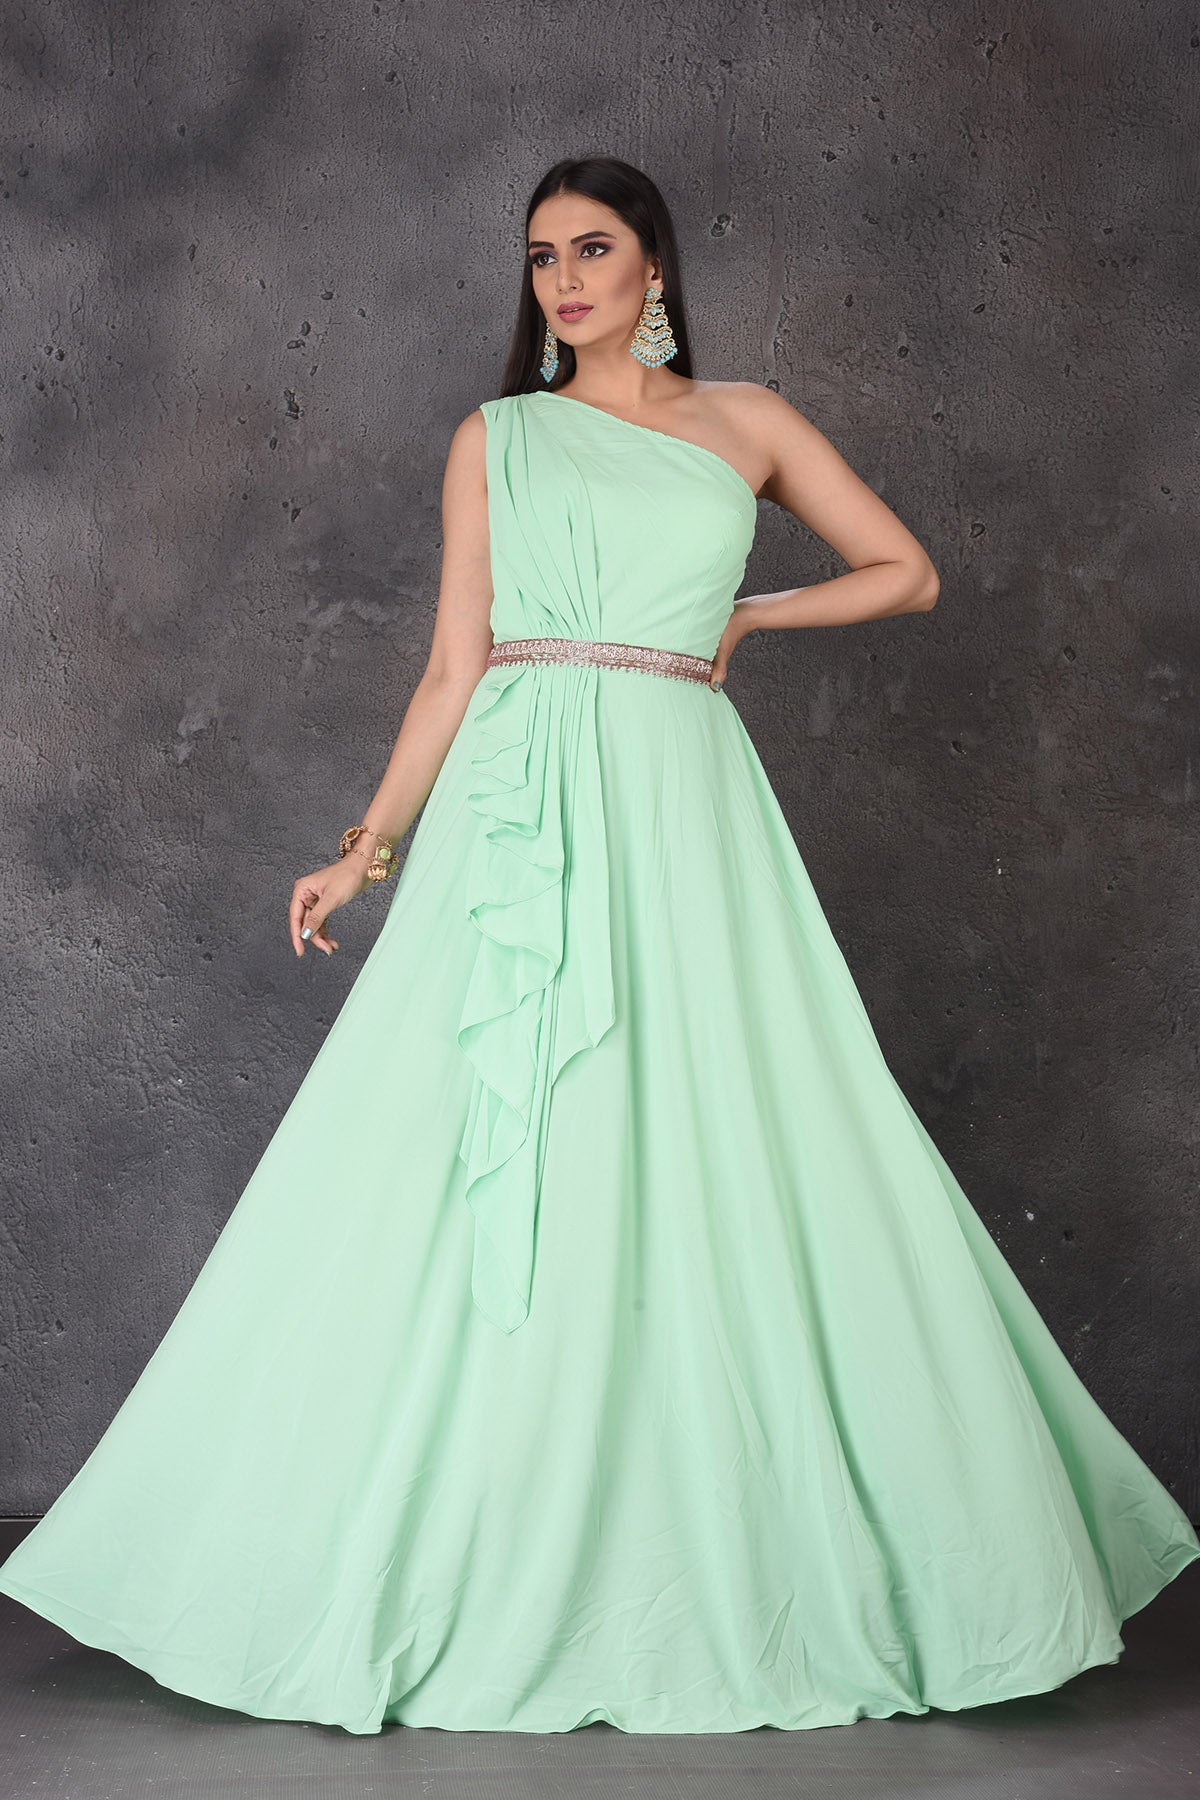 Buy Beautiful Peach Cotton Designer Gown Online USA - Inddus.com.